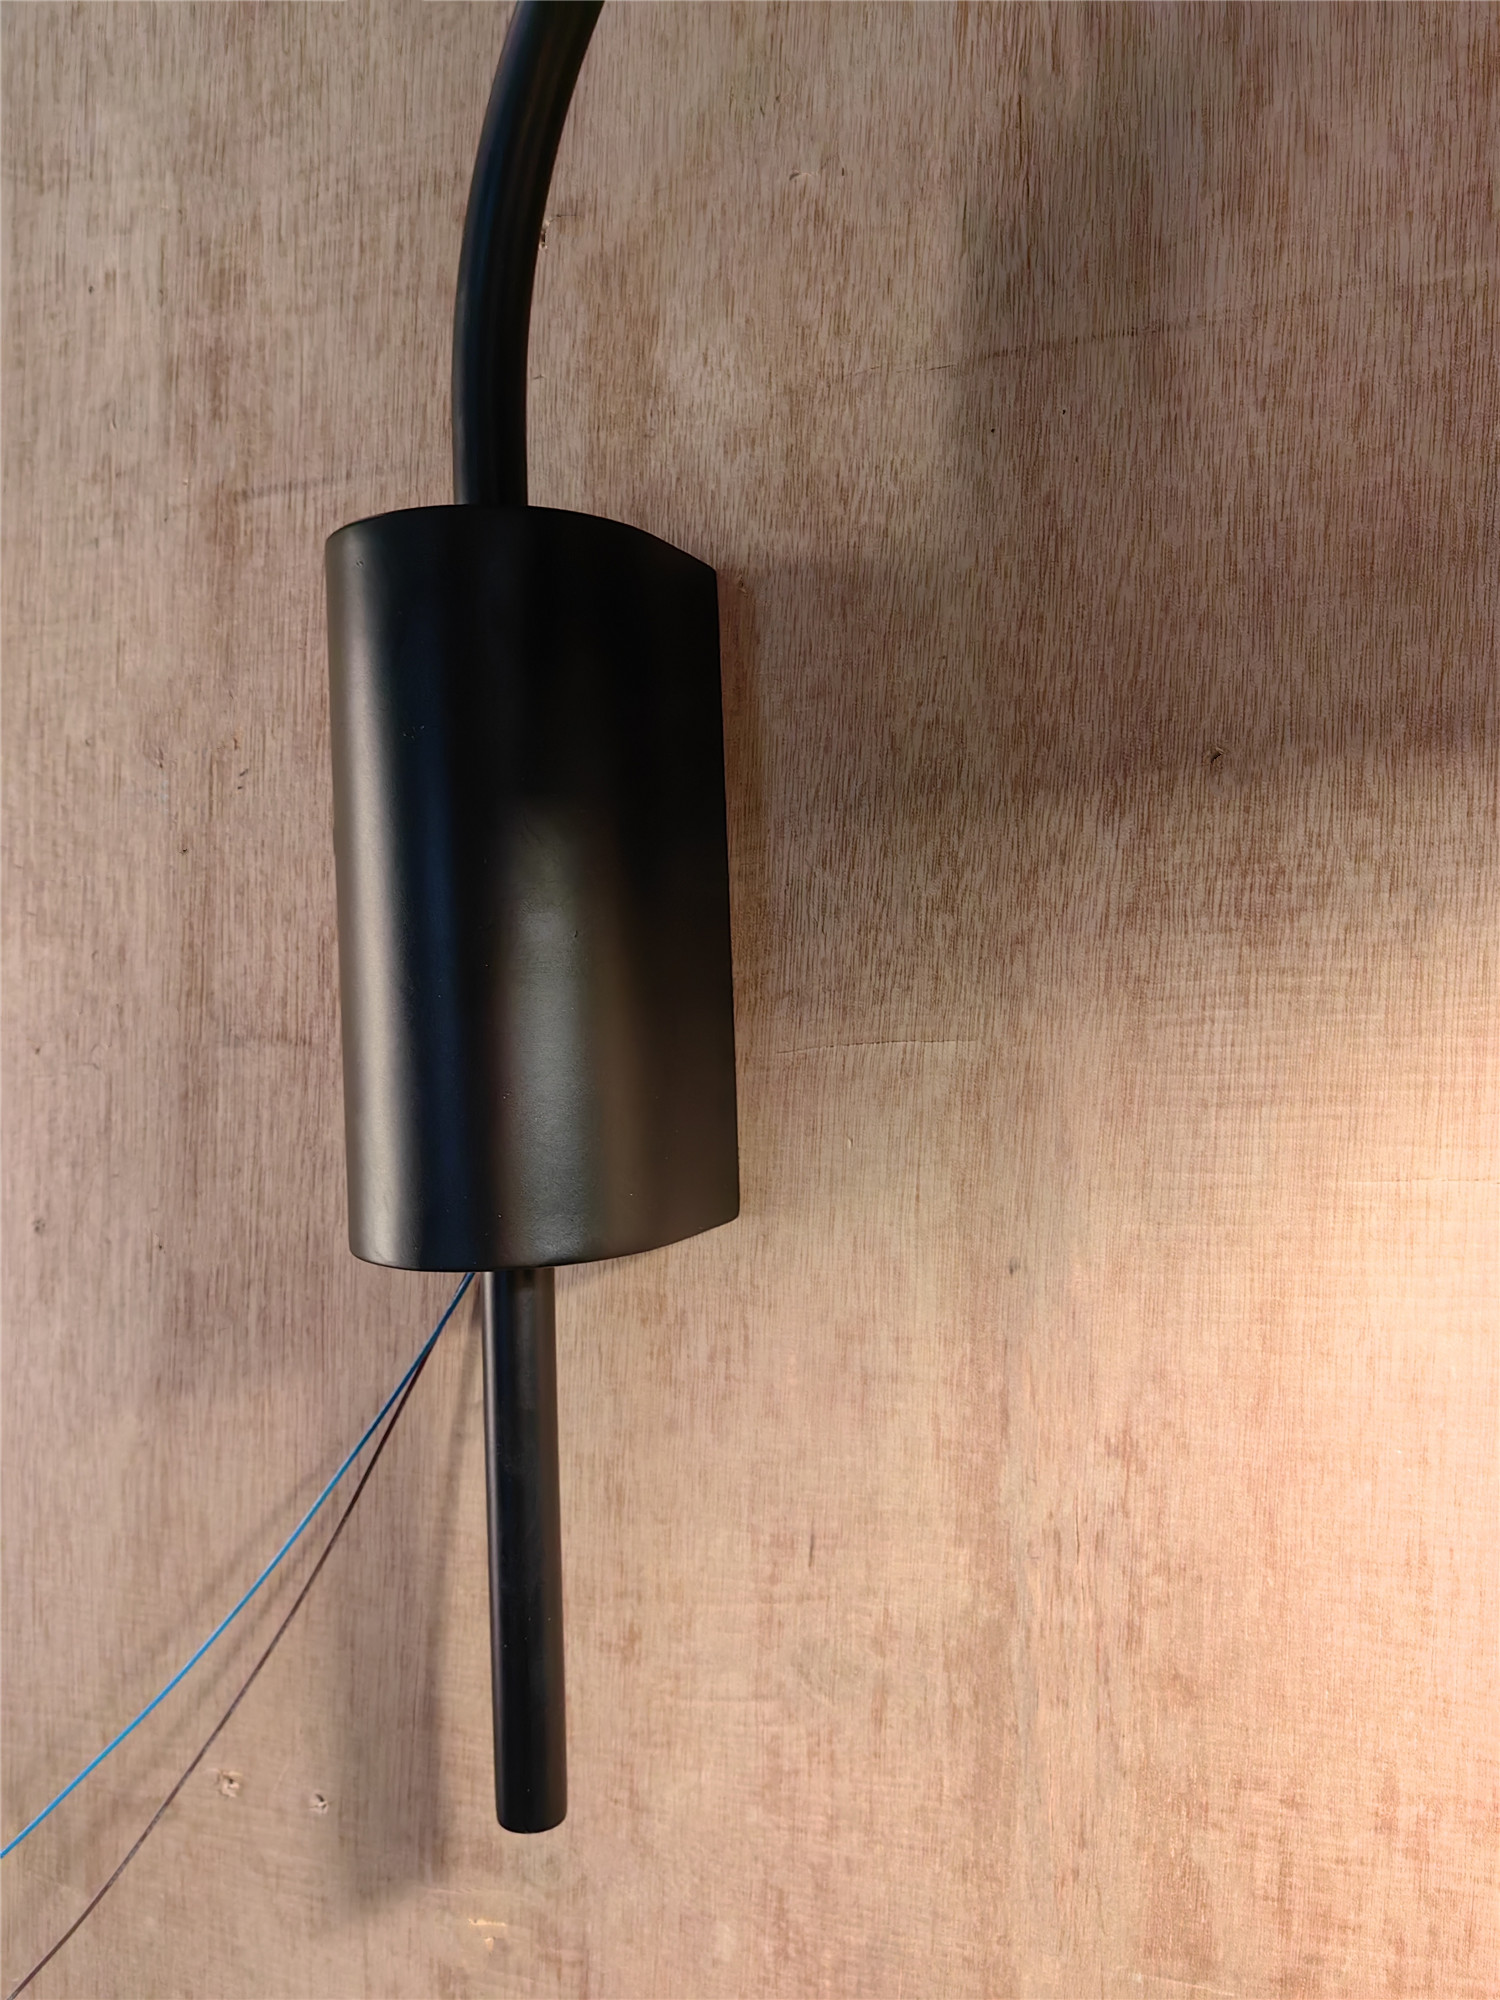 New Design Concise Style Black Metal E27 Wall Light(KJB02)